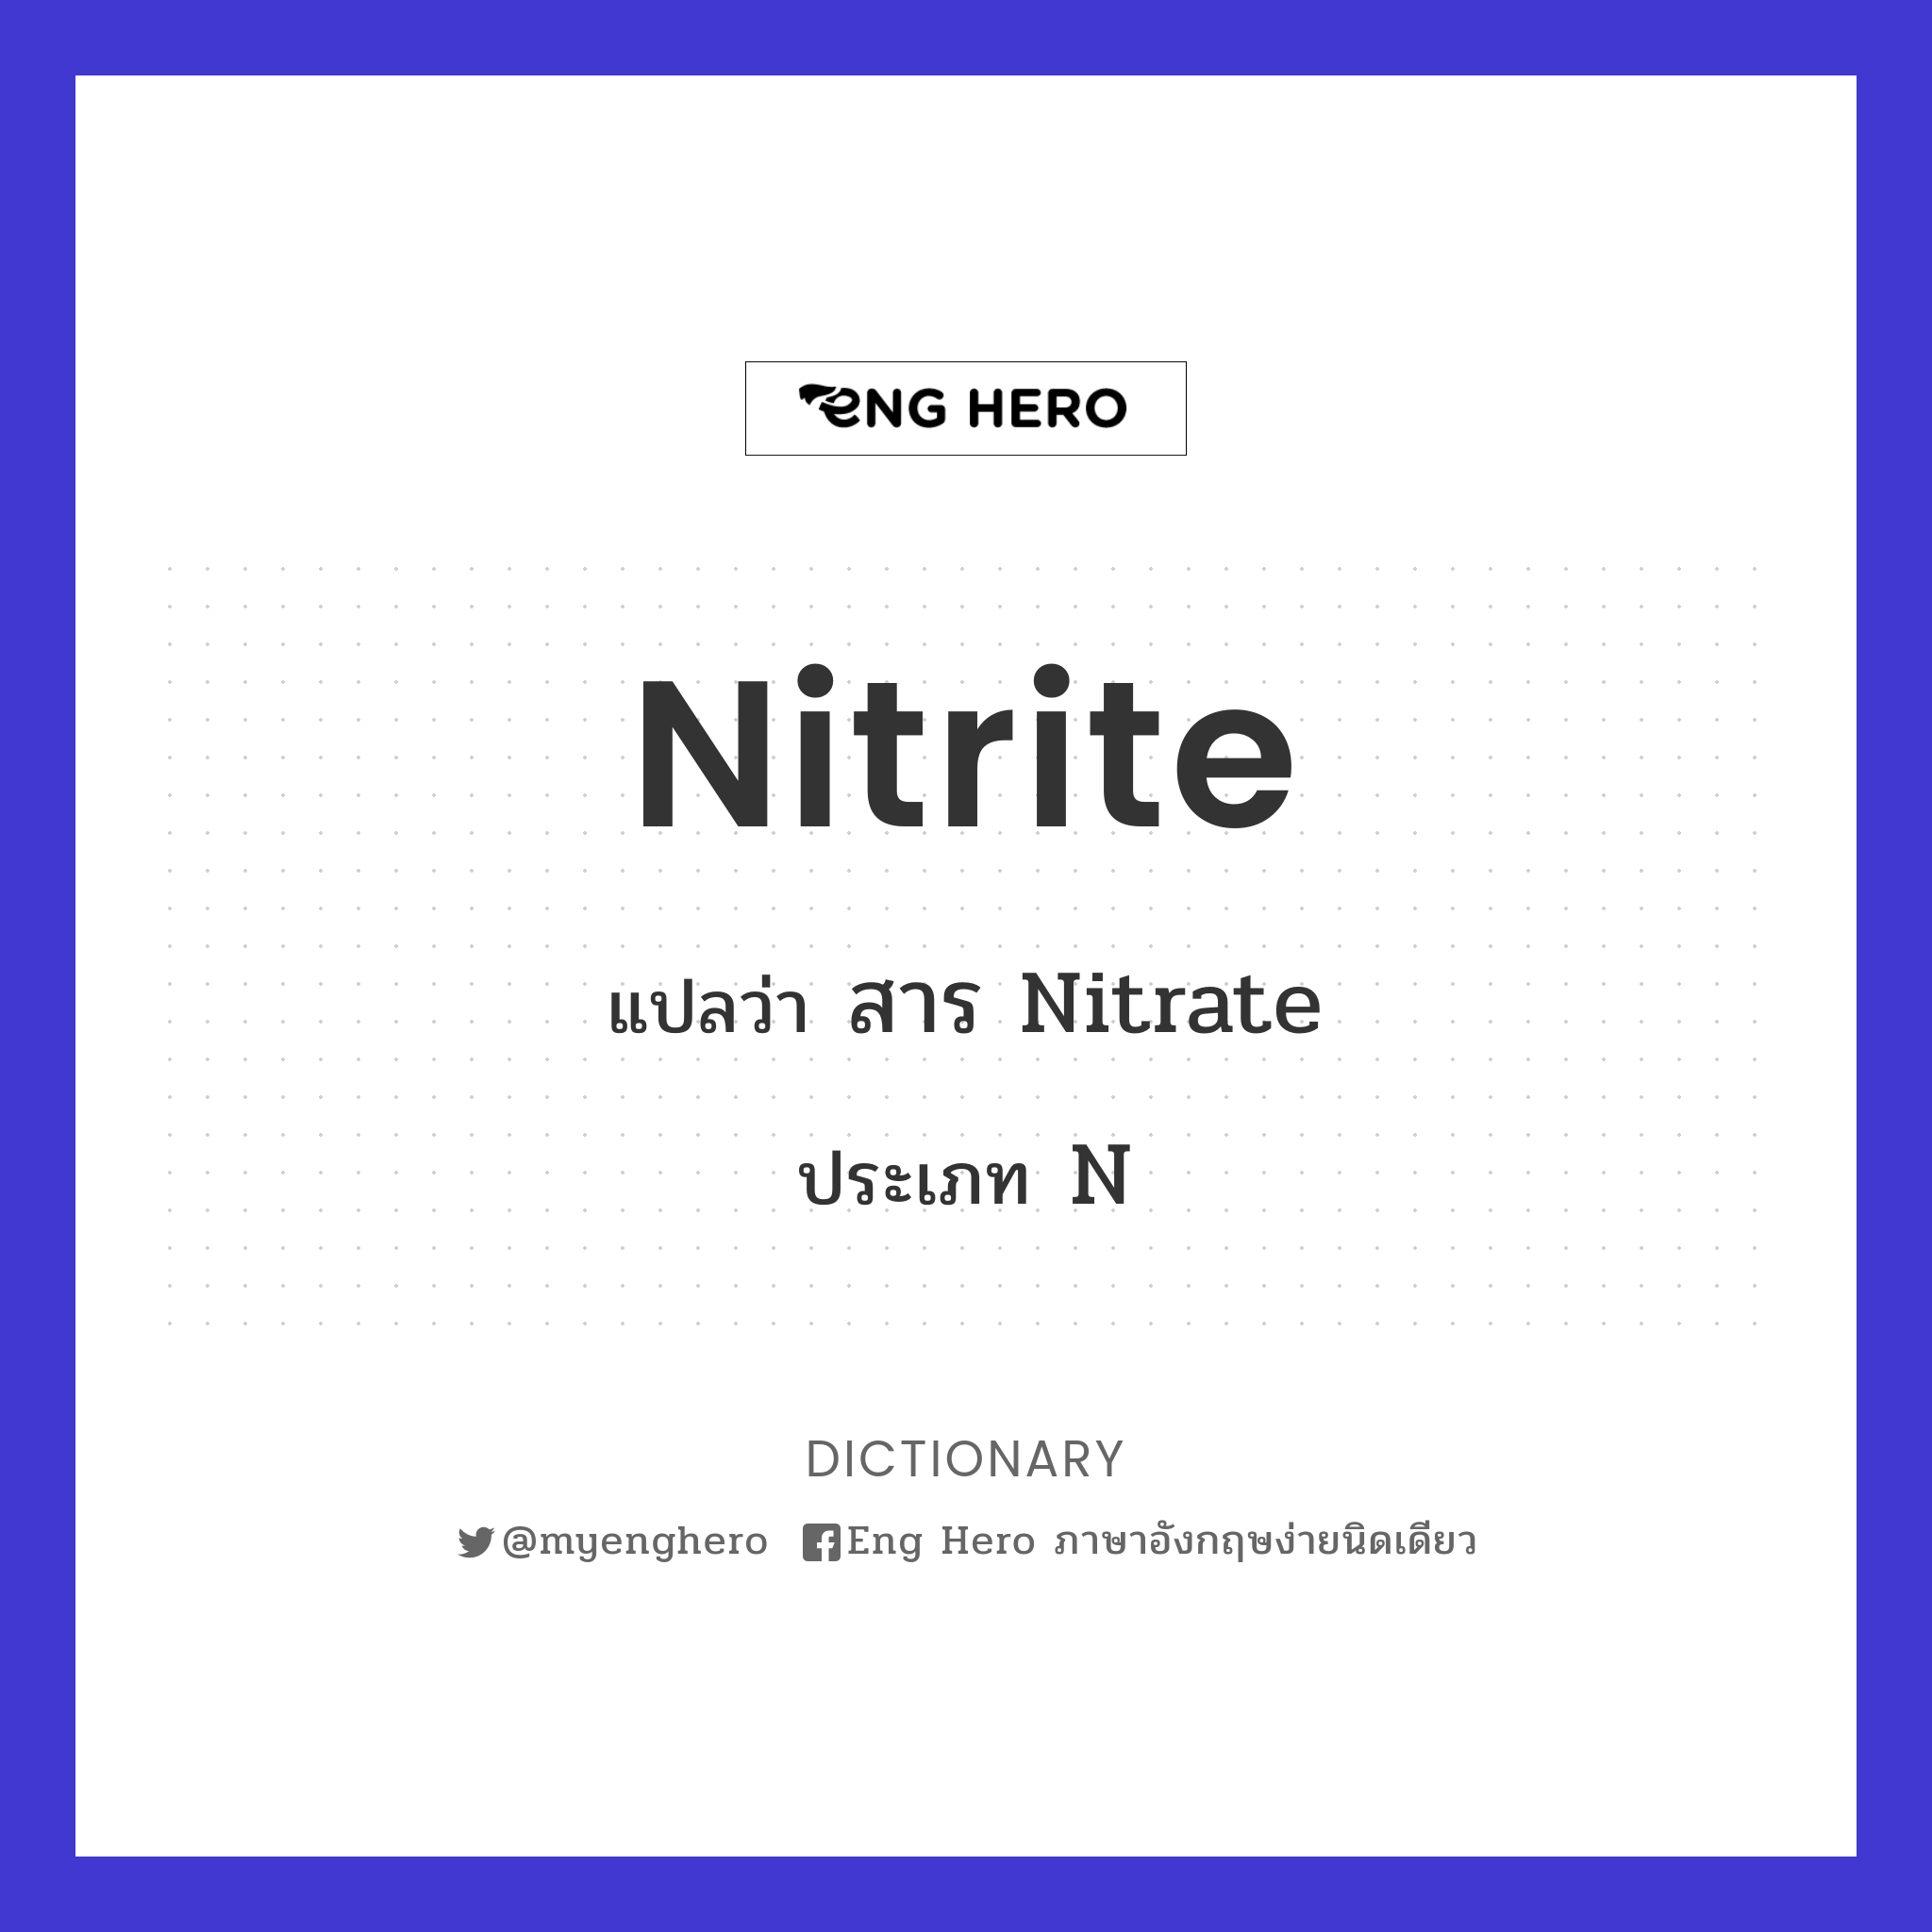 nitrite